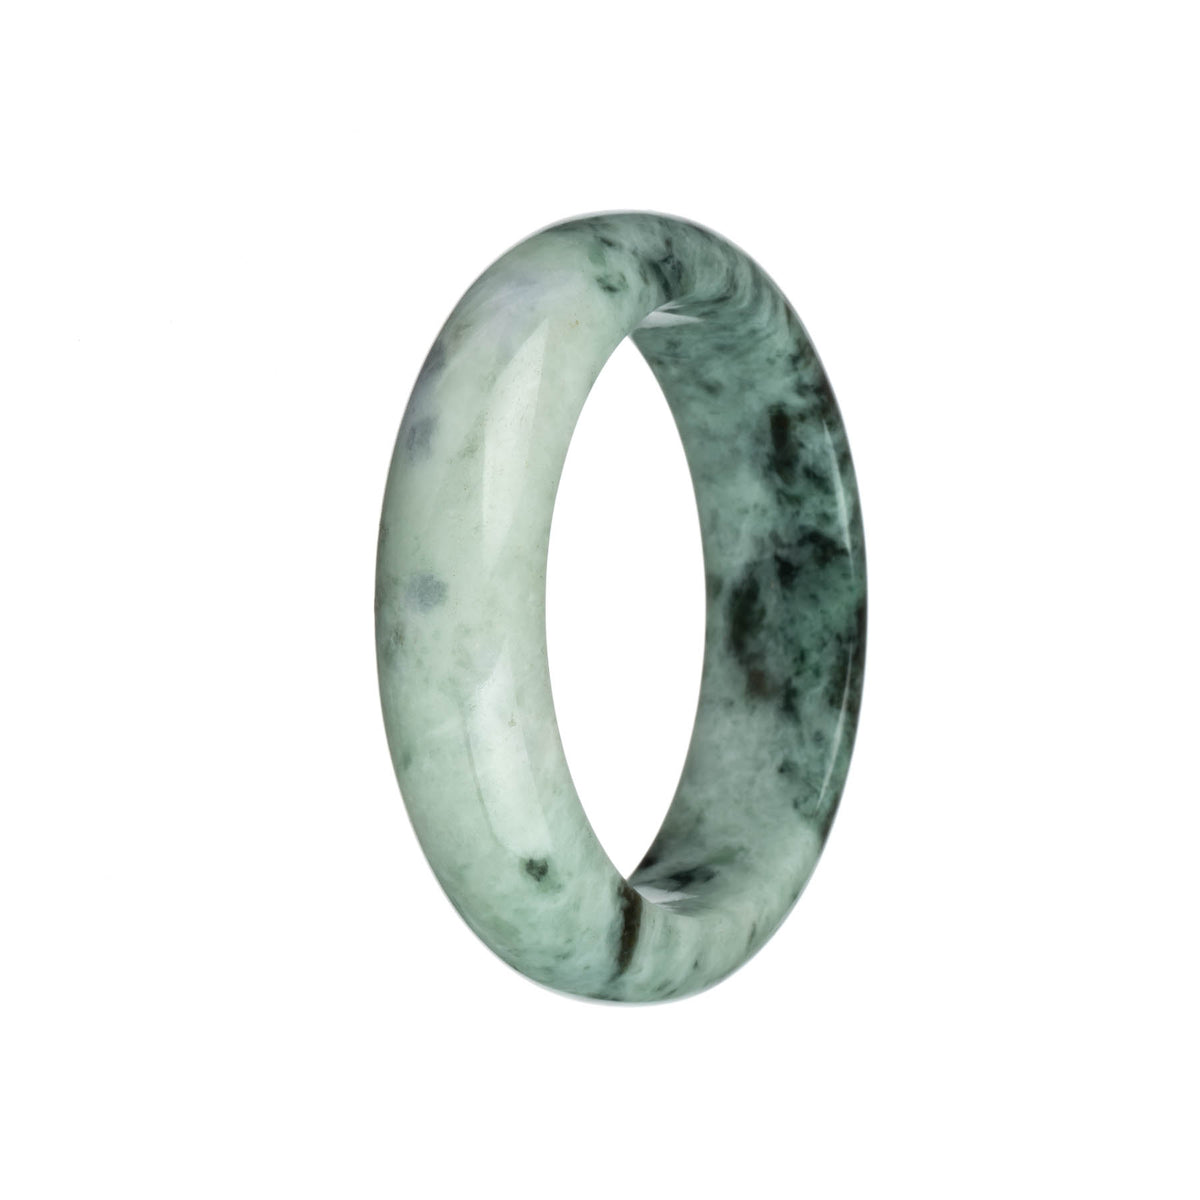 Genuine Grade A Pale Green with Dark Green Patterns Burma Jade Bangle Bracelet - 57mm Half Moon